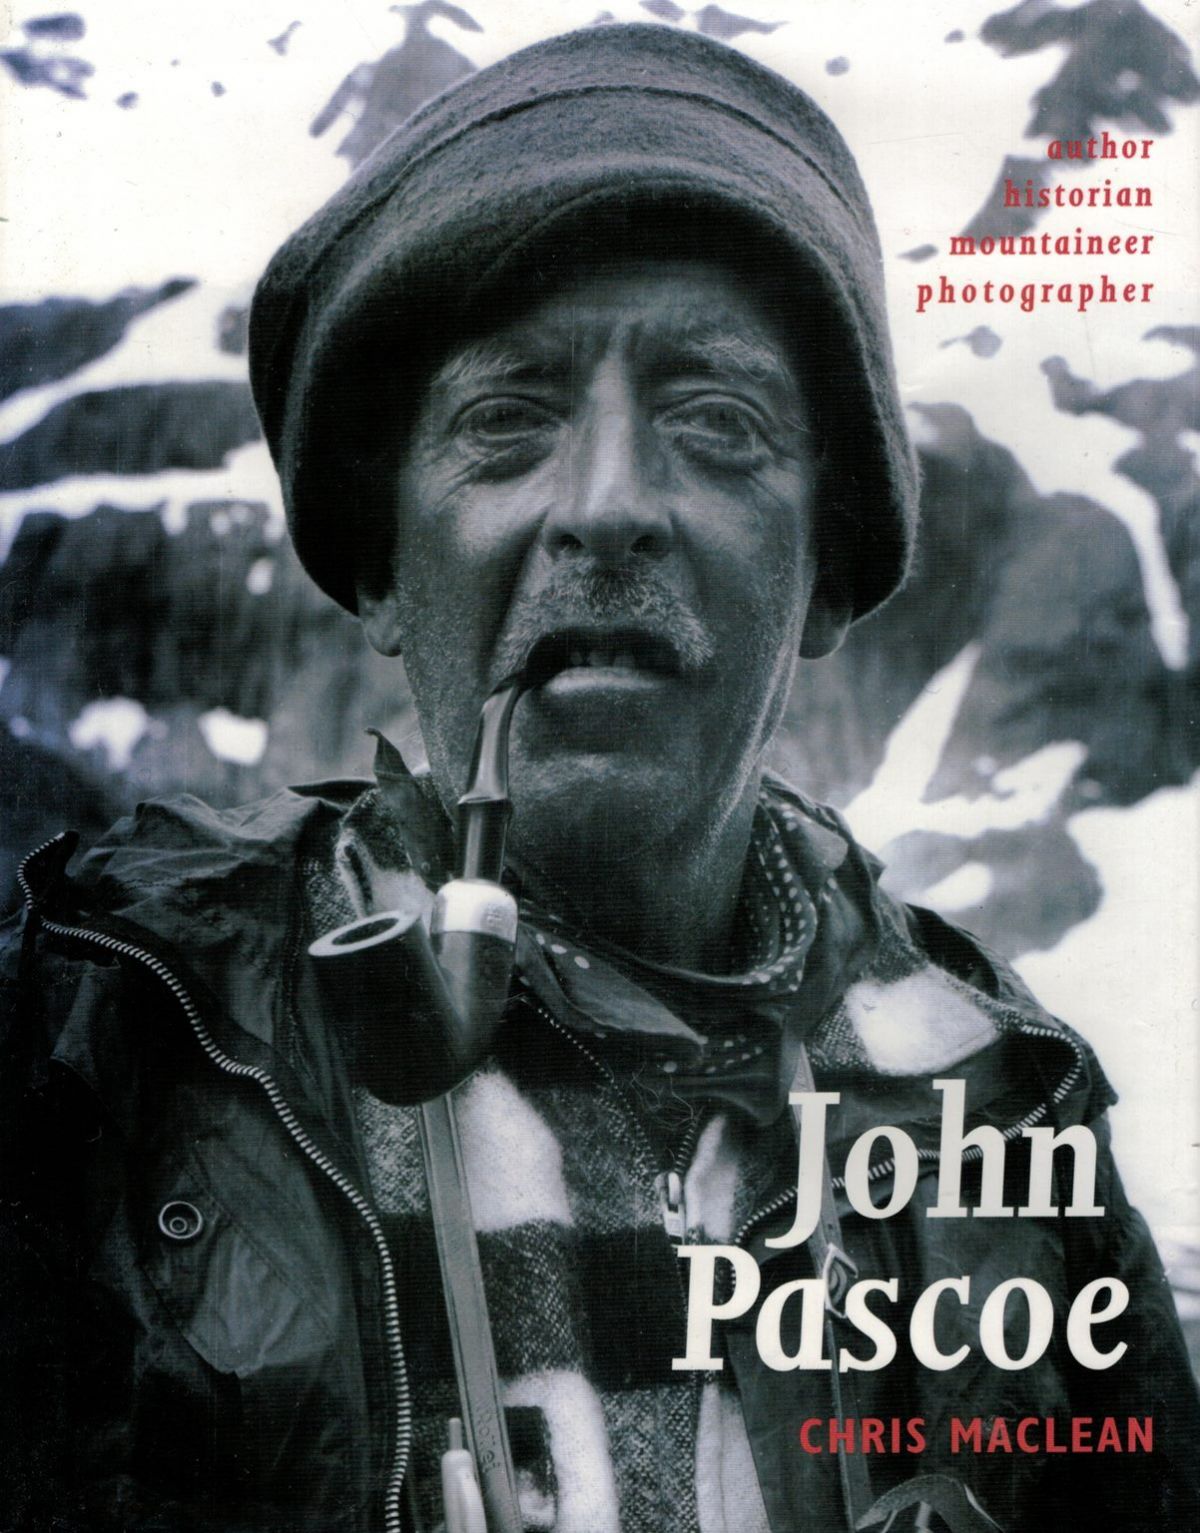 JOHN PASCOE: Author, Historian, Mountaineer, Photographer